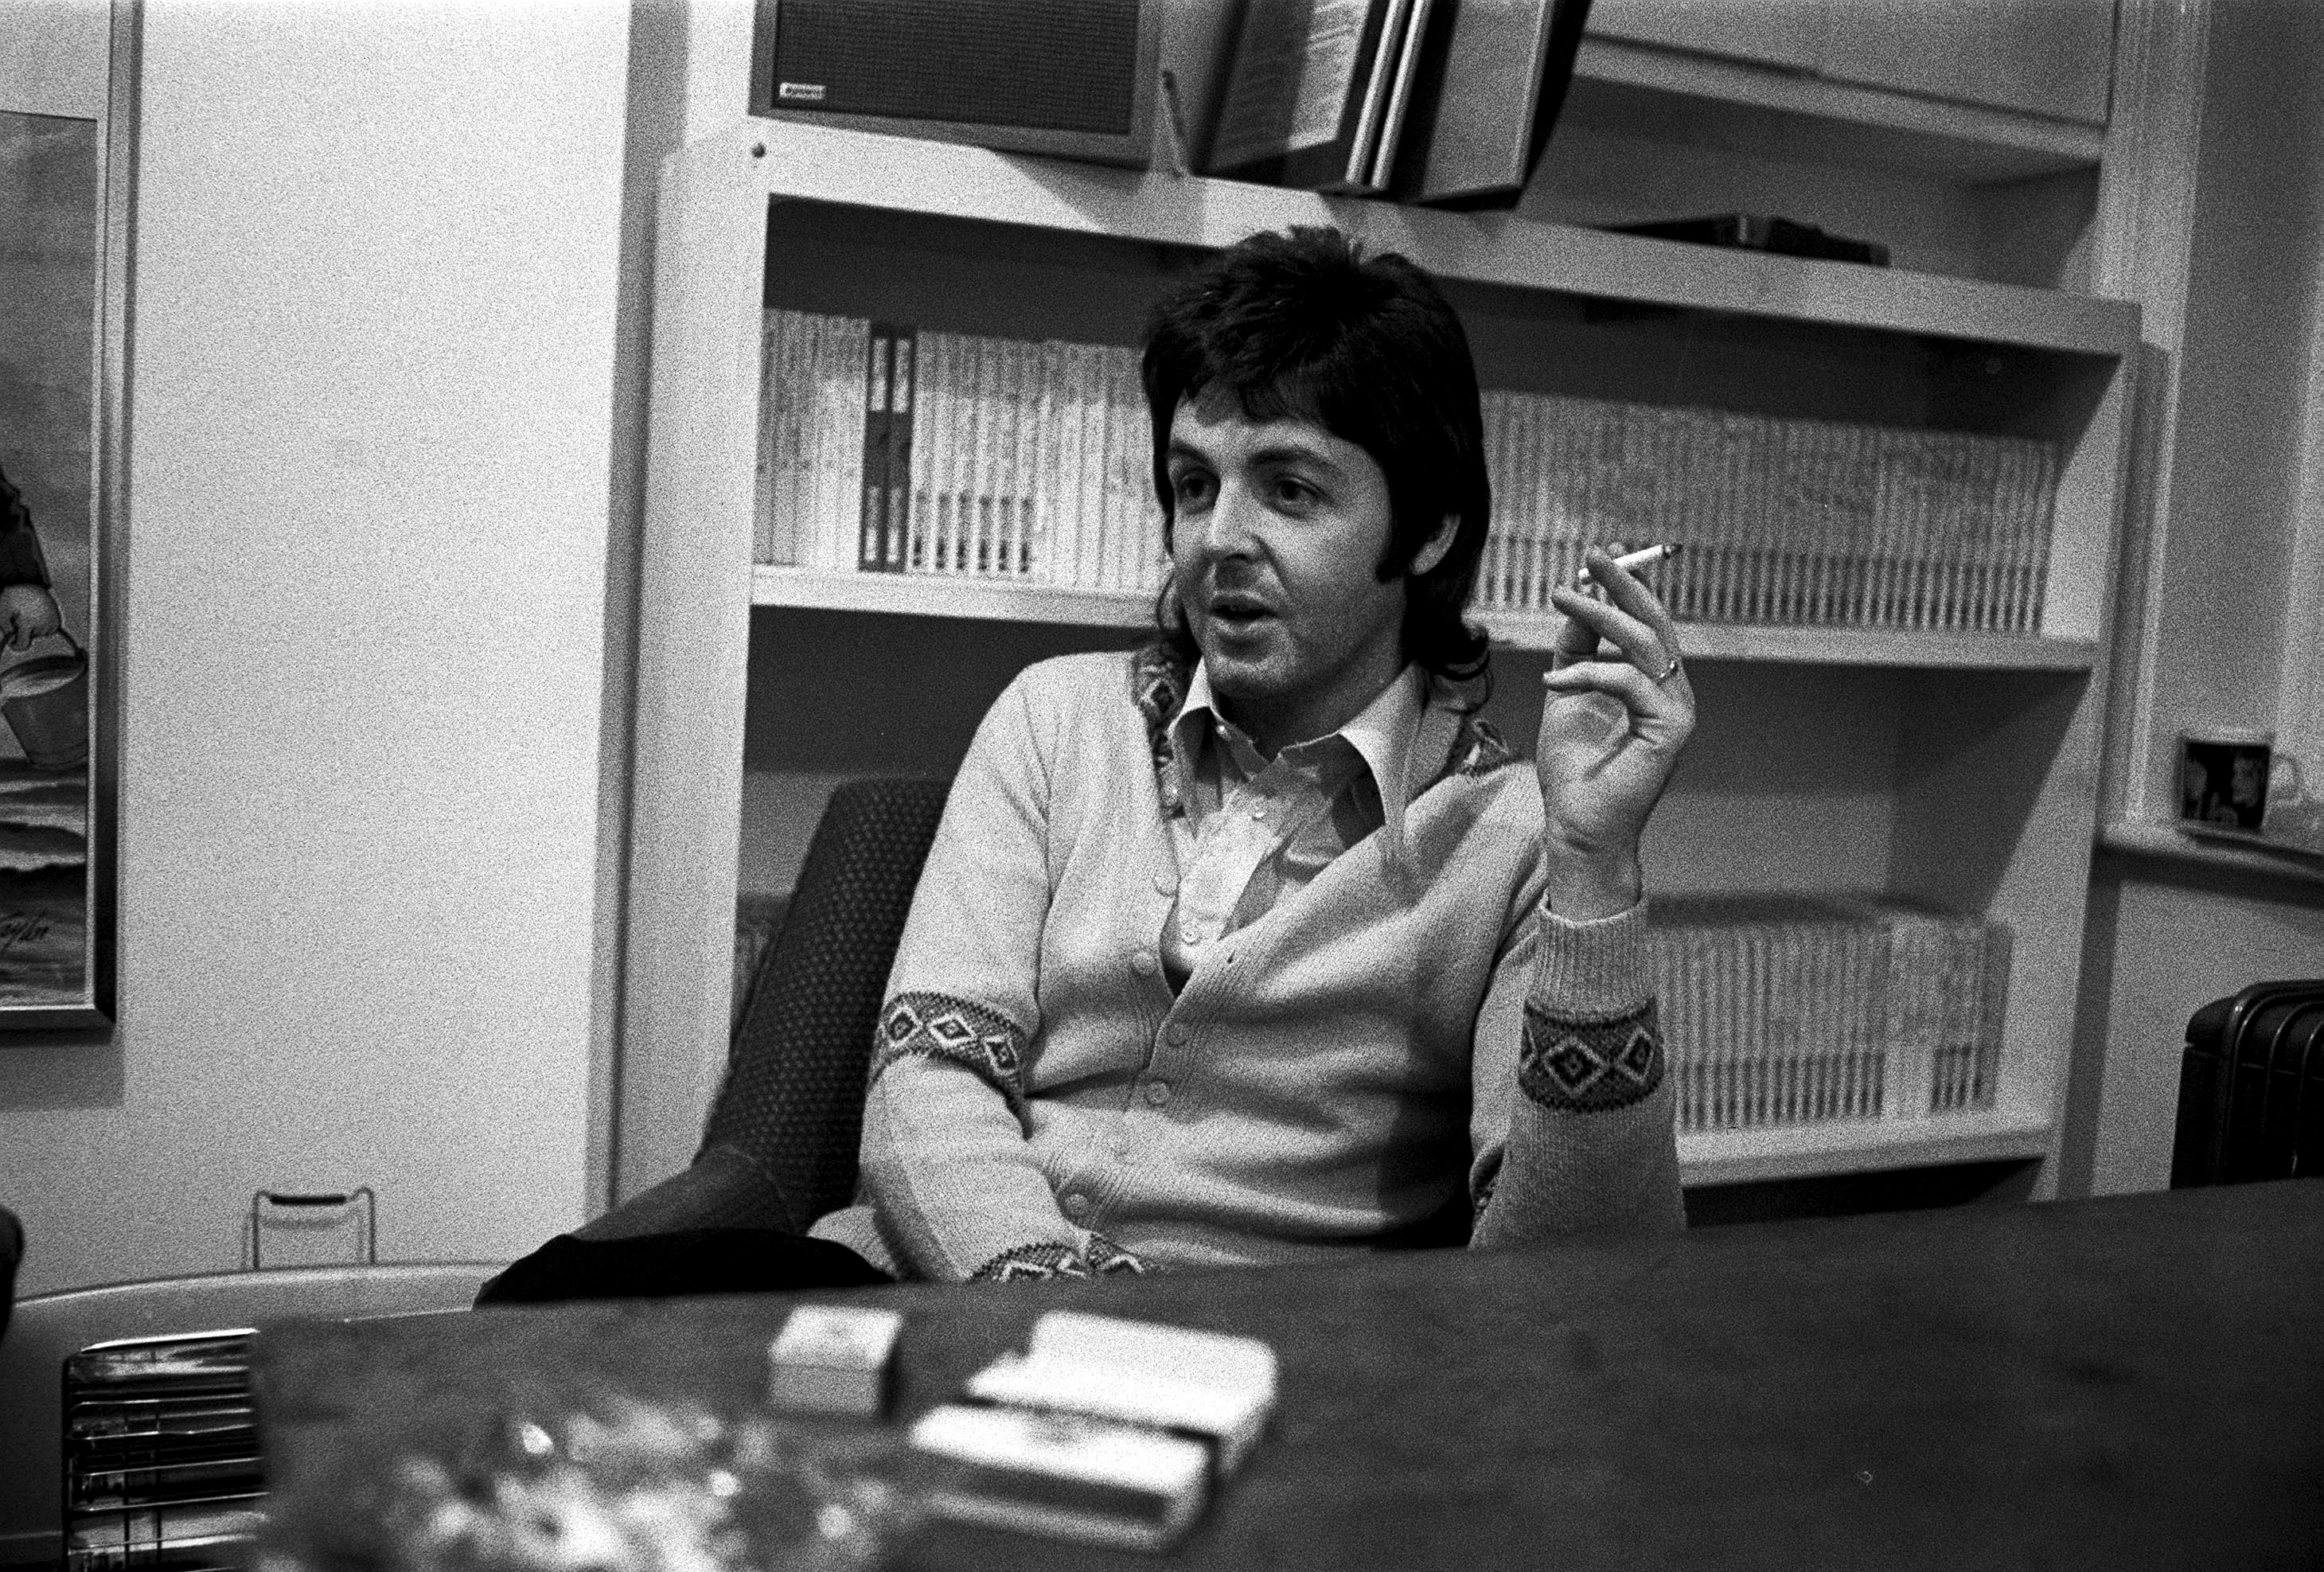 Paul McCartney in front of a bookshelf